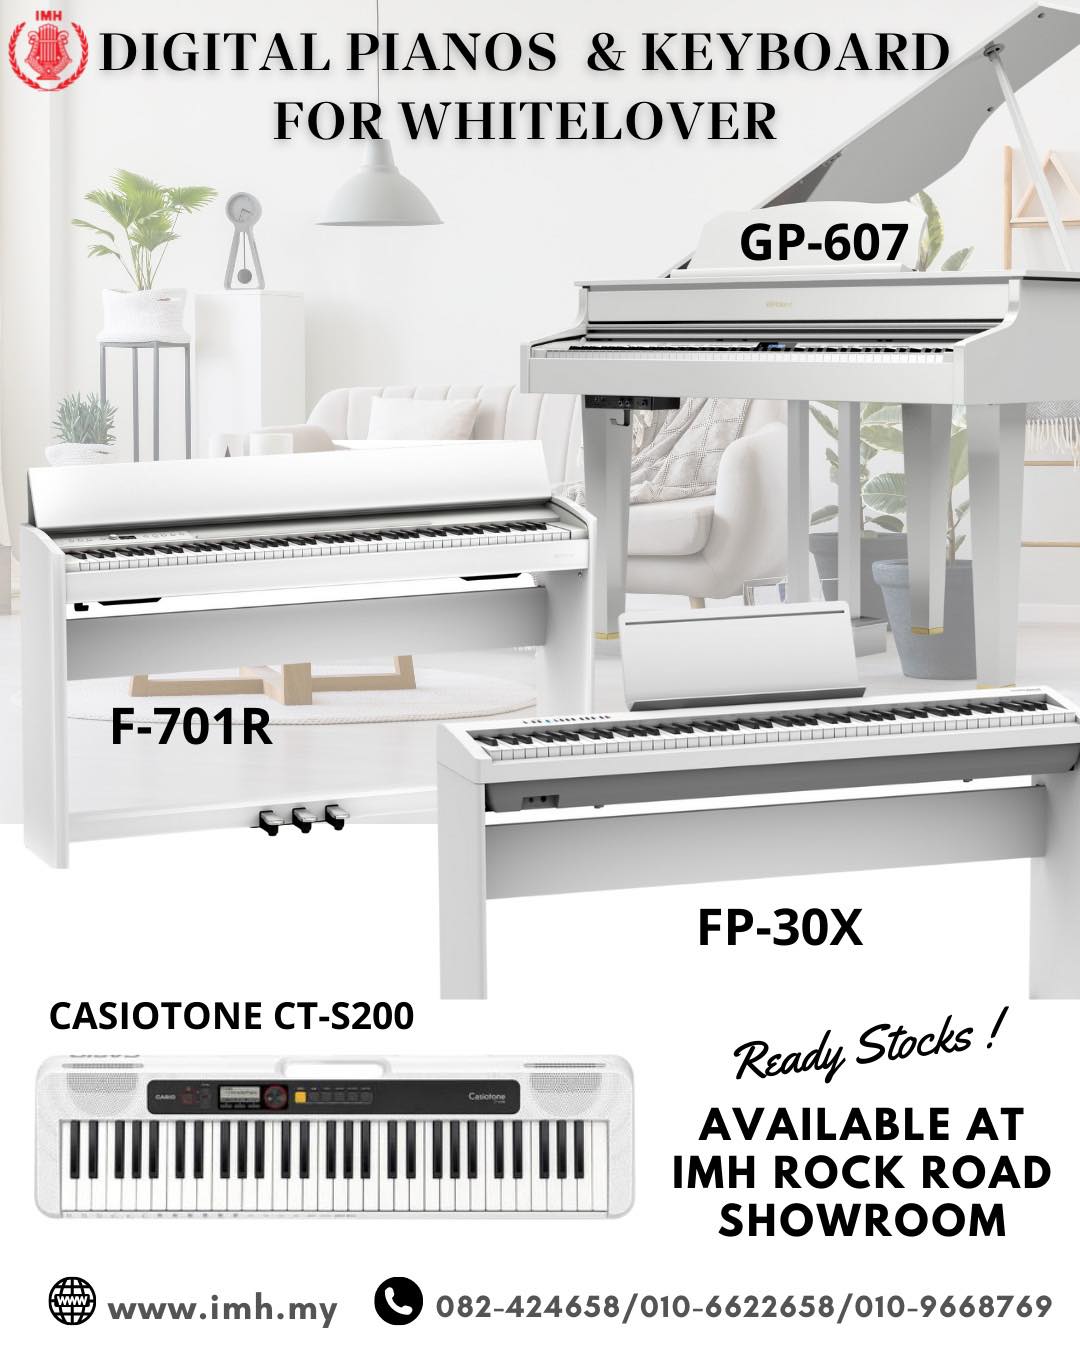 White Digital Pianos & Keyboard